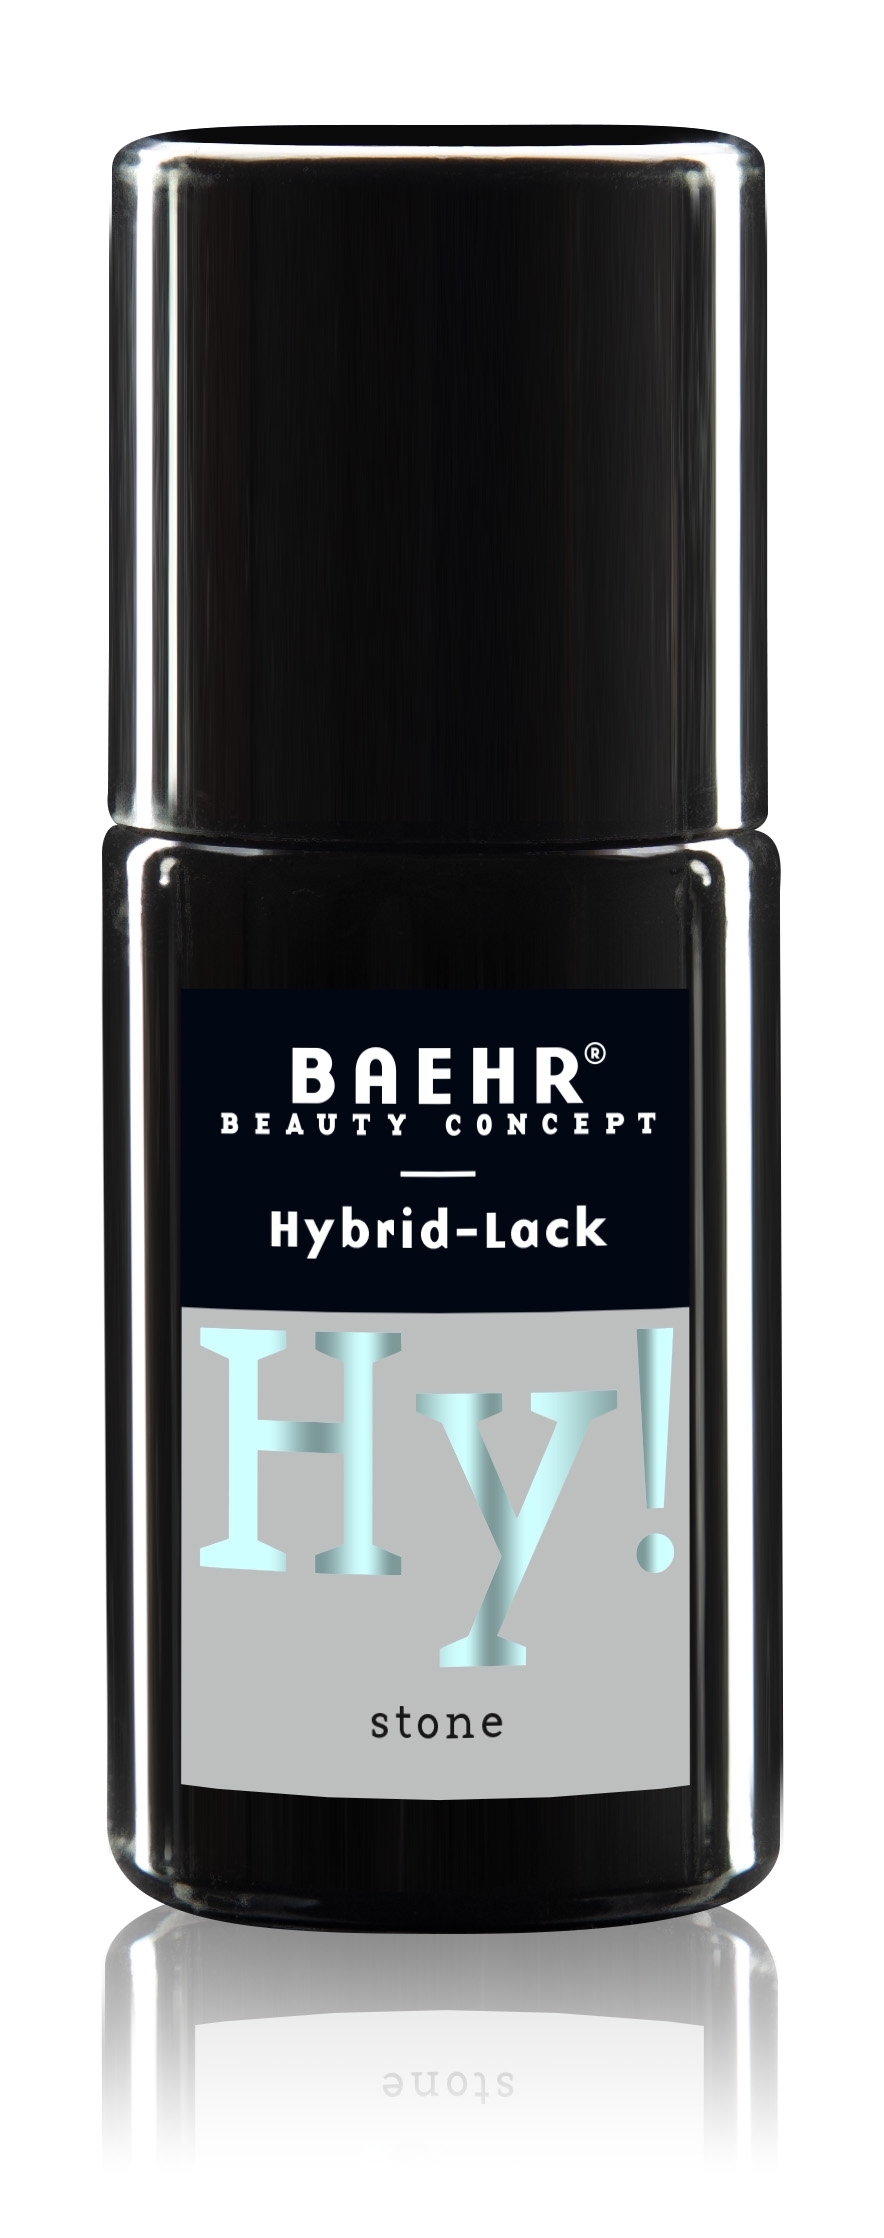 BAEHR BEAUTY CONCEPT - NAILS Hy! Hybrid-Lack, stone 8 ml